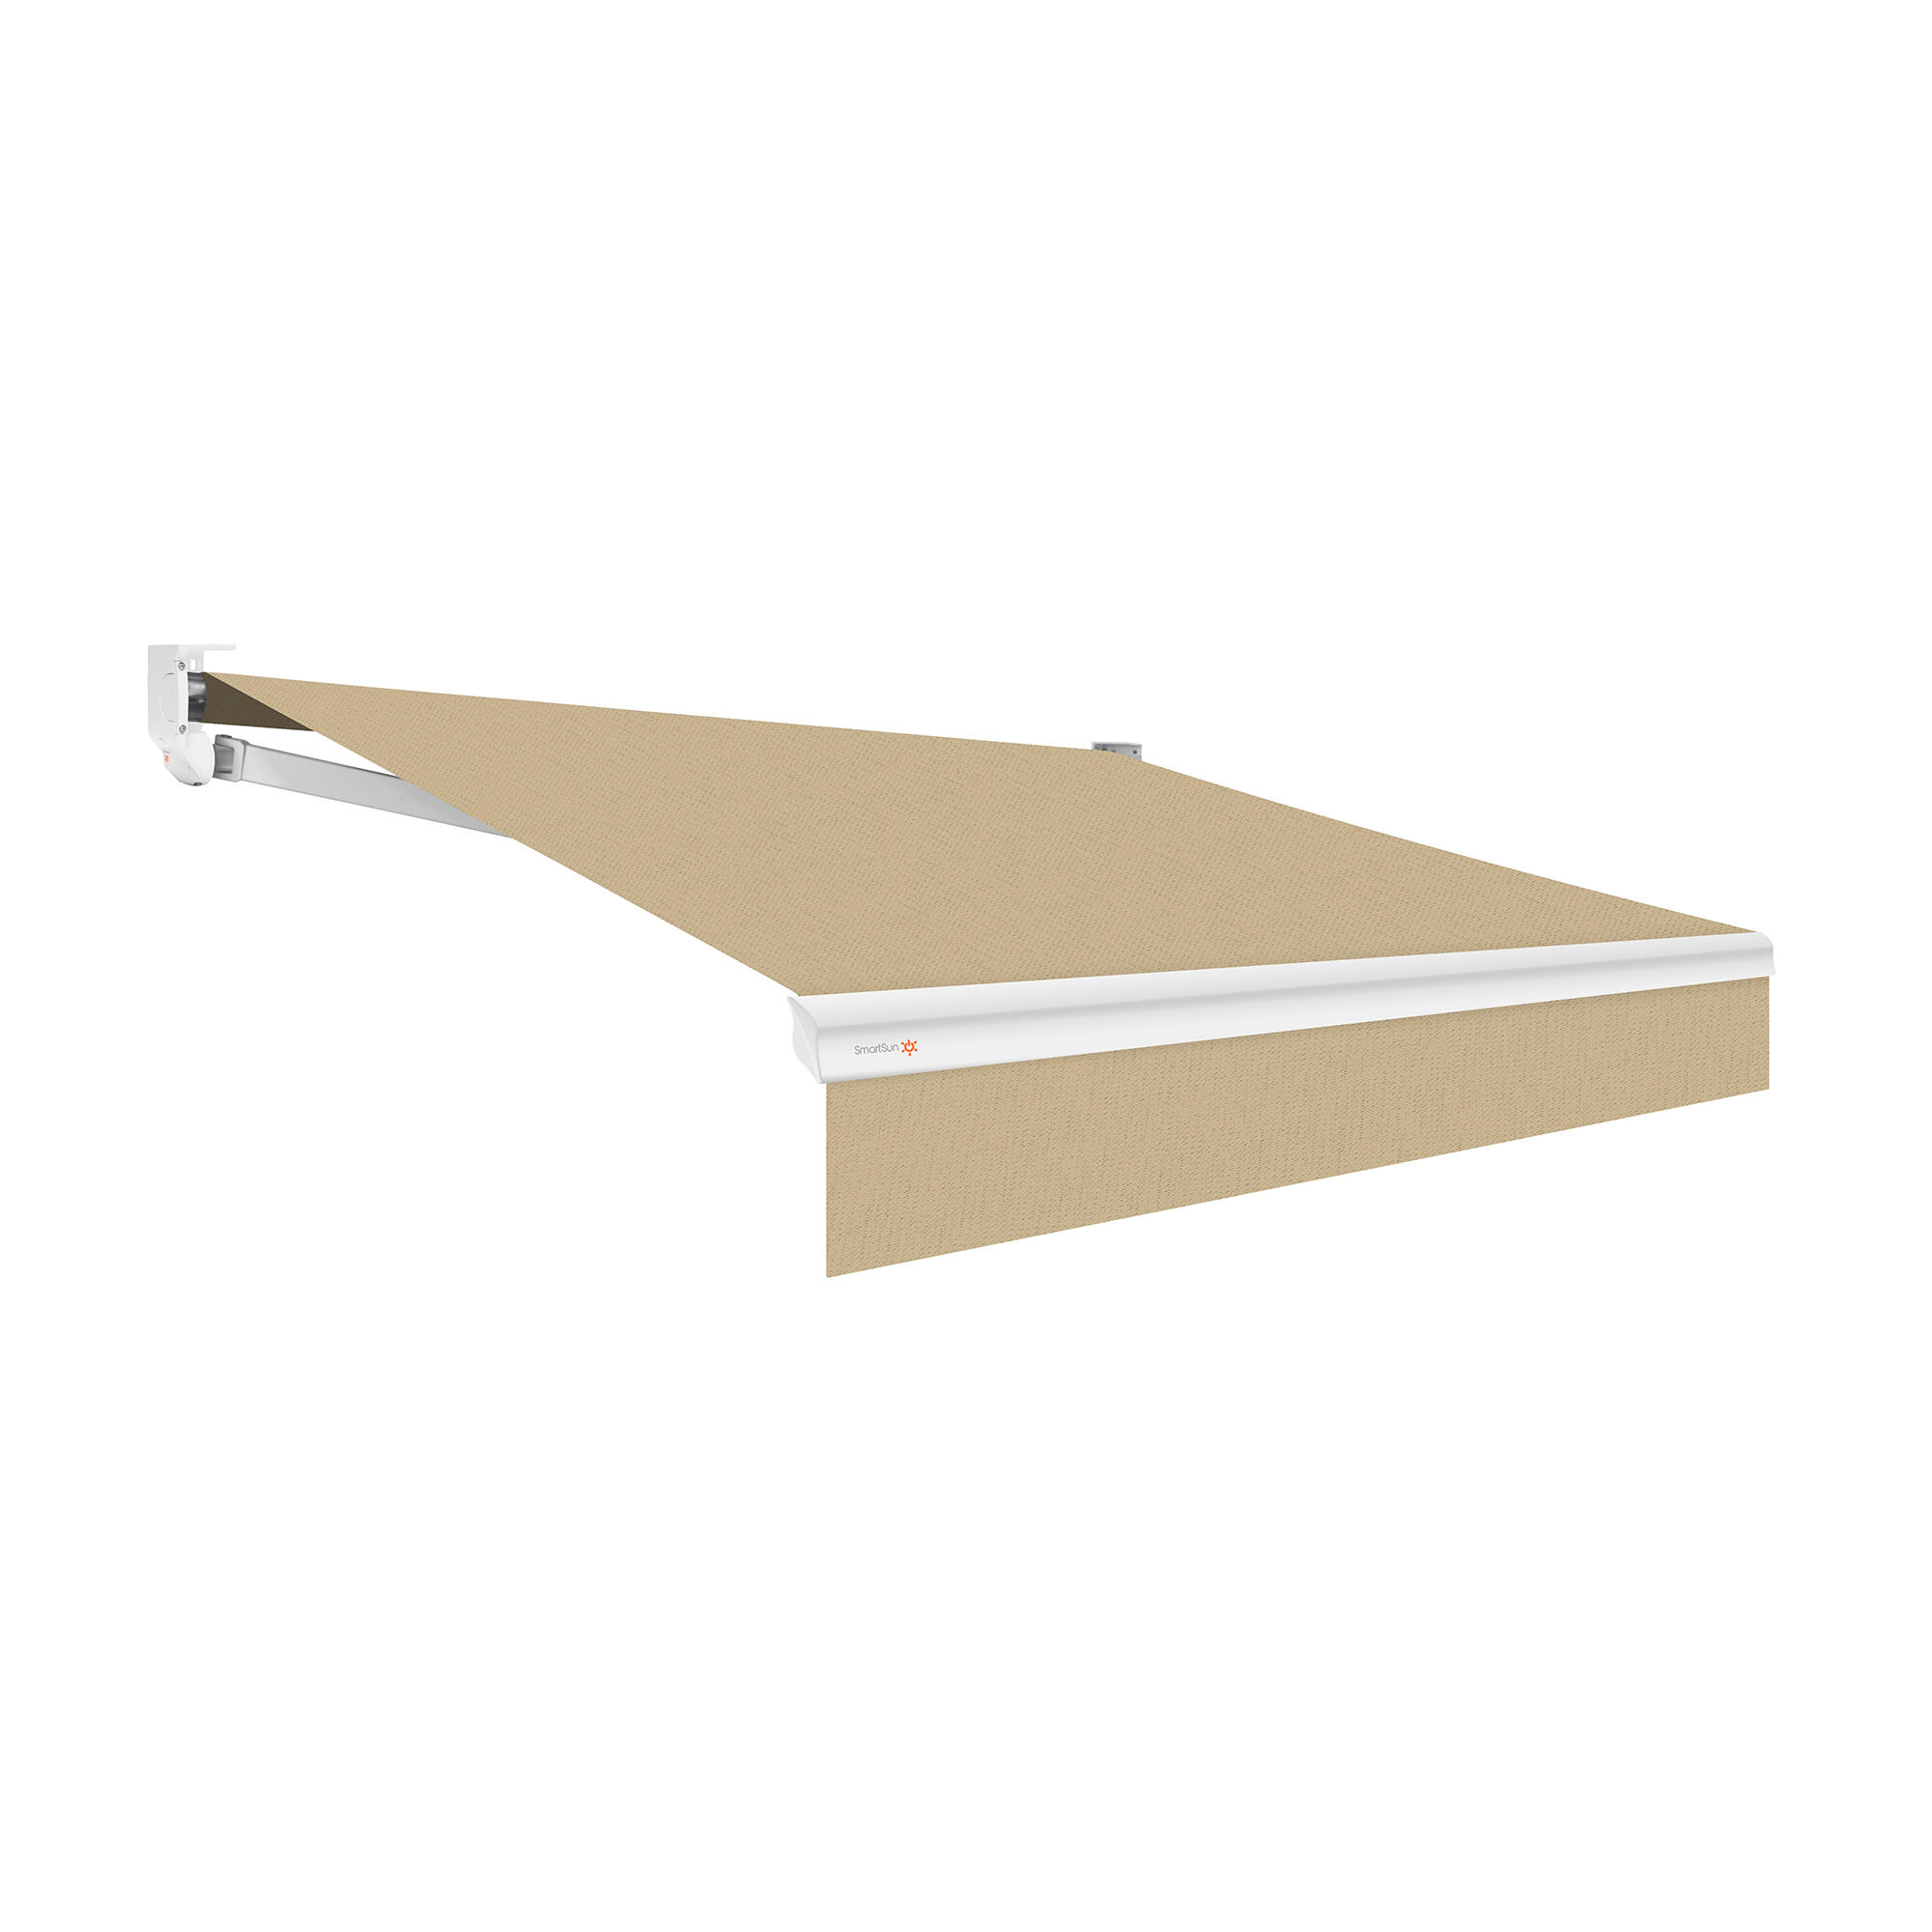 Toldo shibuya brazo extensible manual estructura blanco tela beige 3.5x2 metros